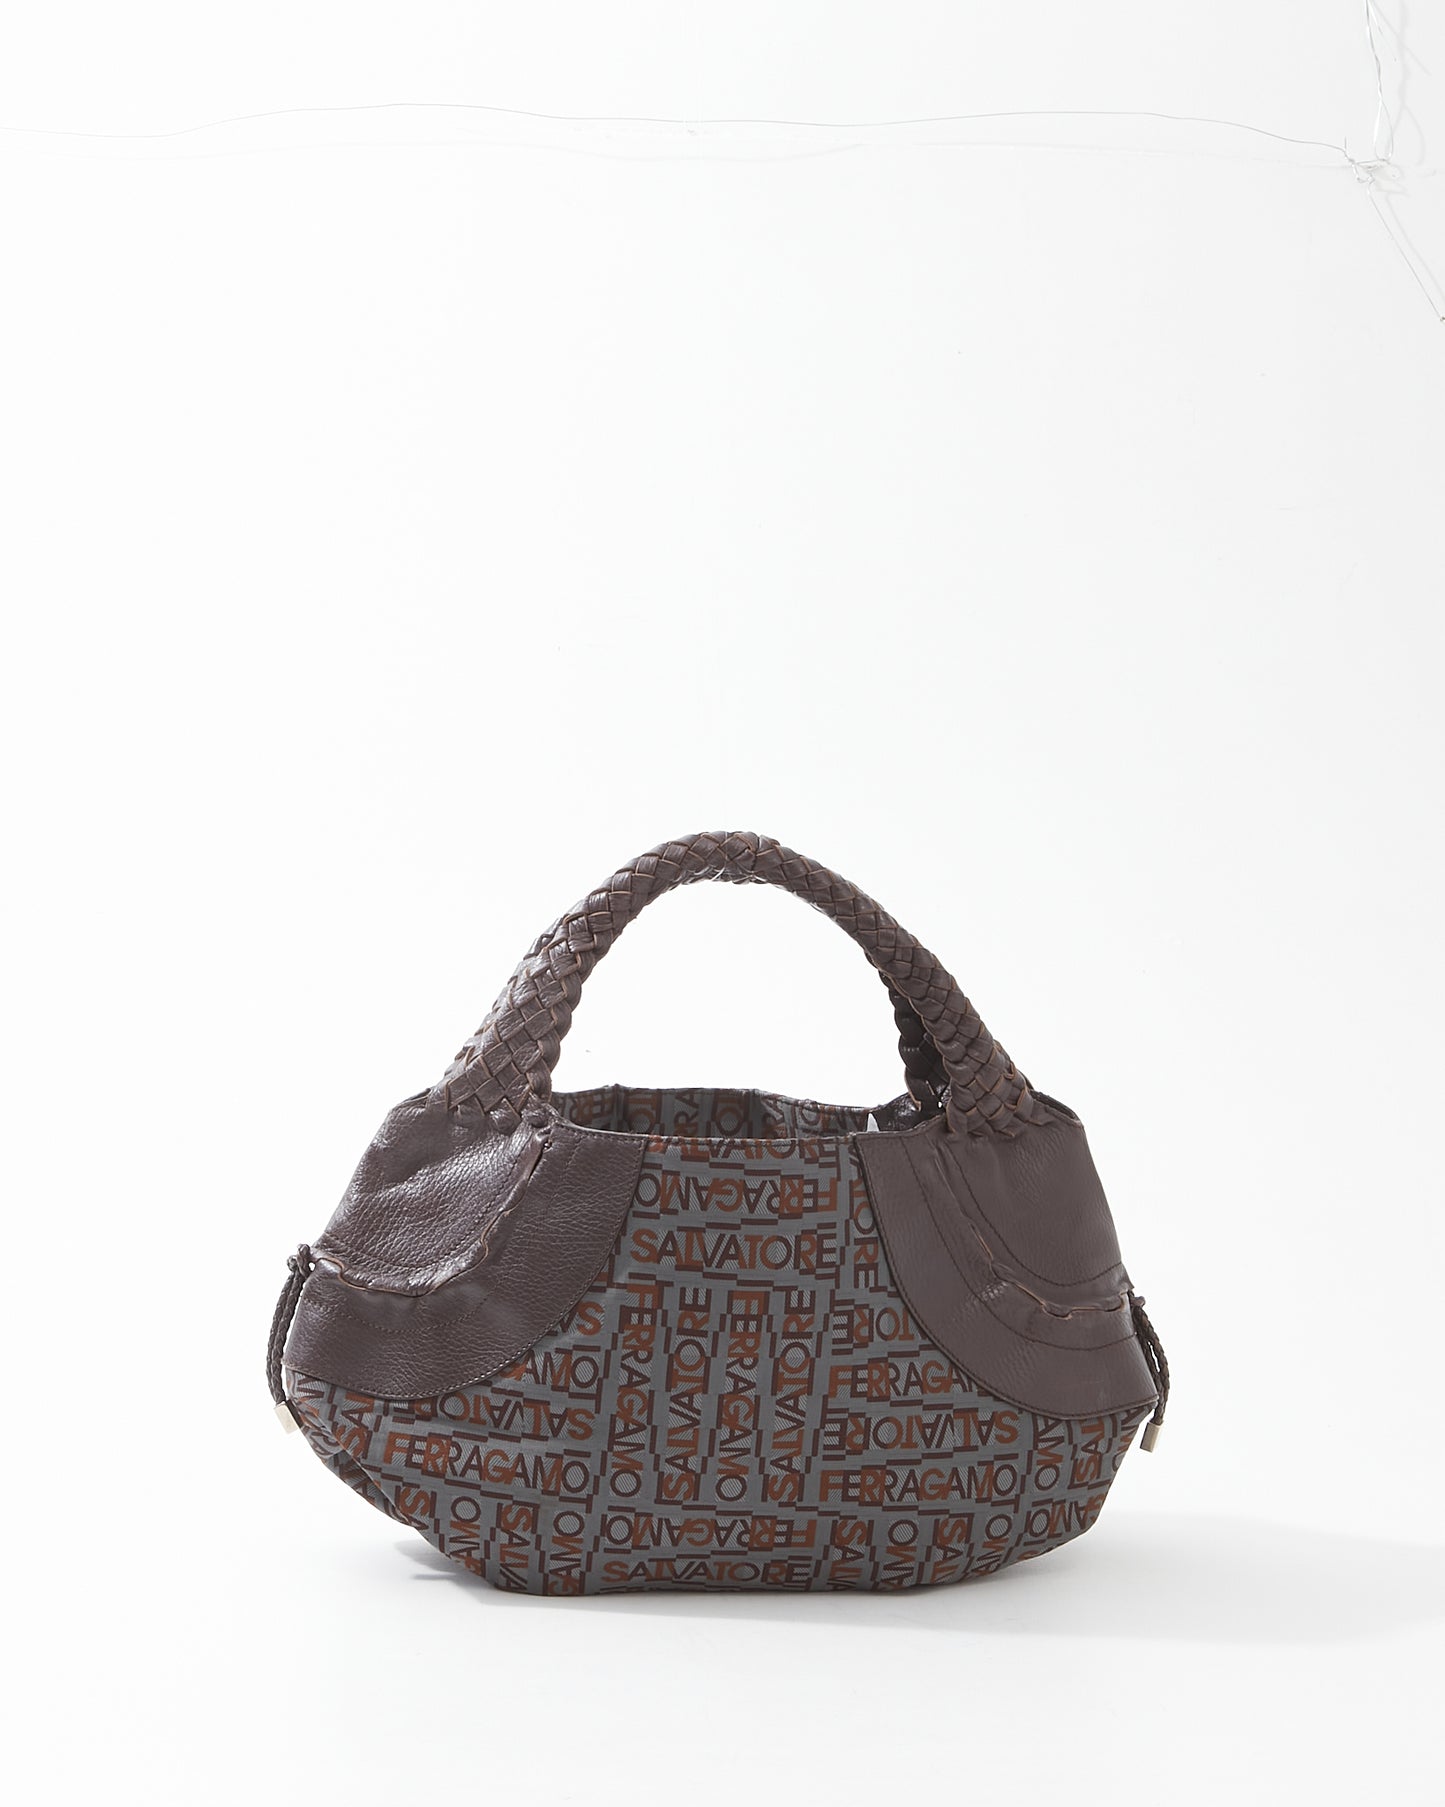 Ferragamo Brown Canvas/Leather Logo Shoulder Bag